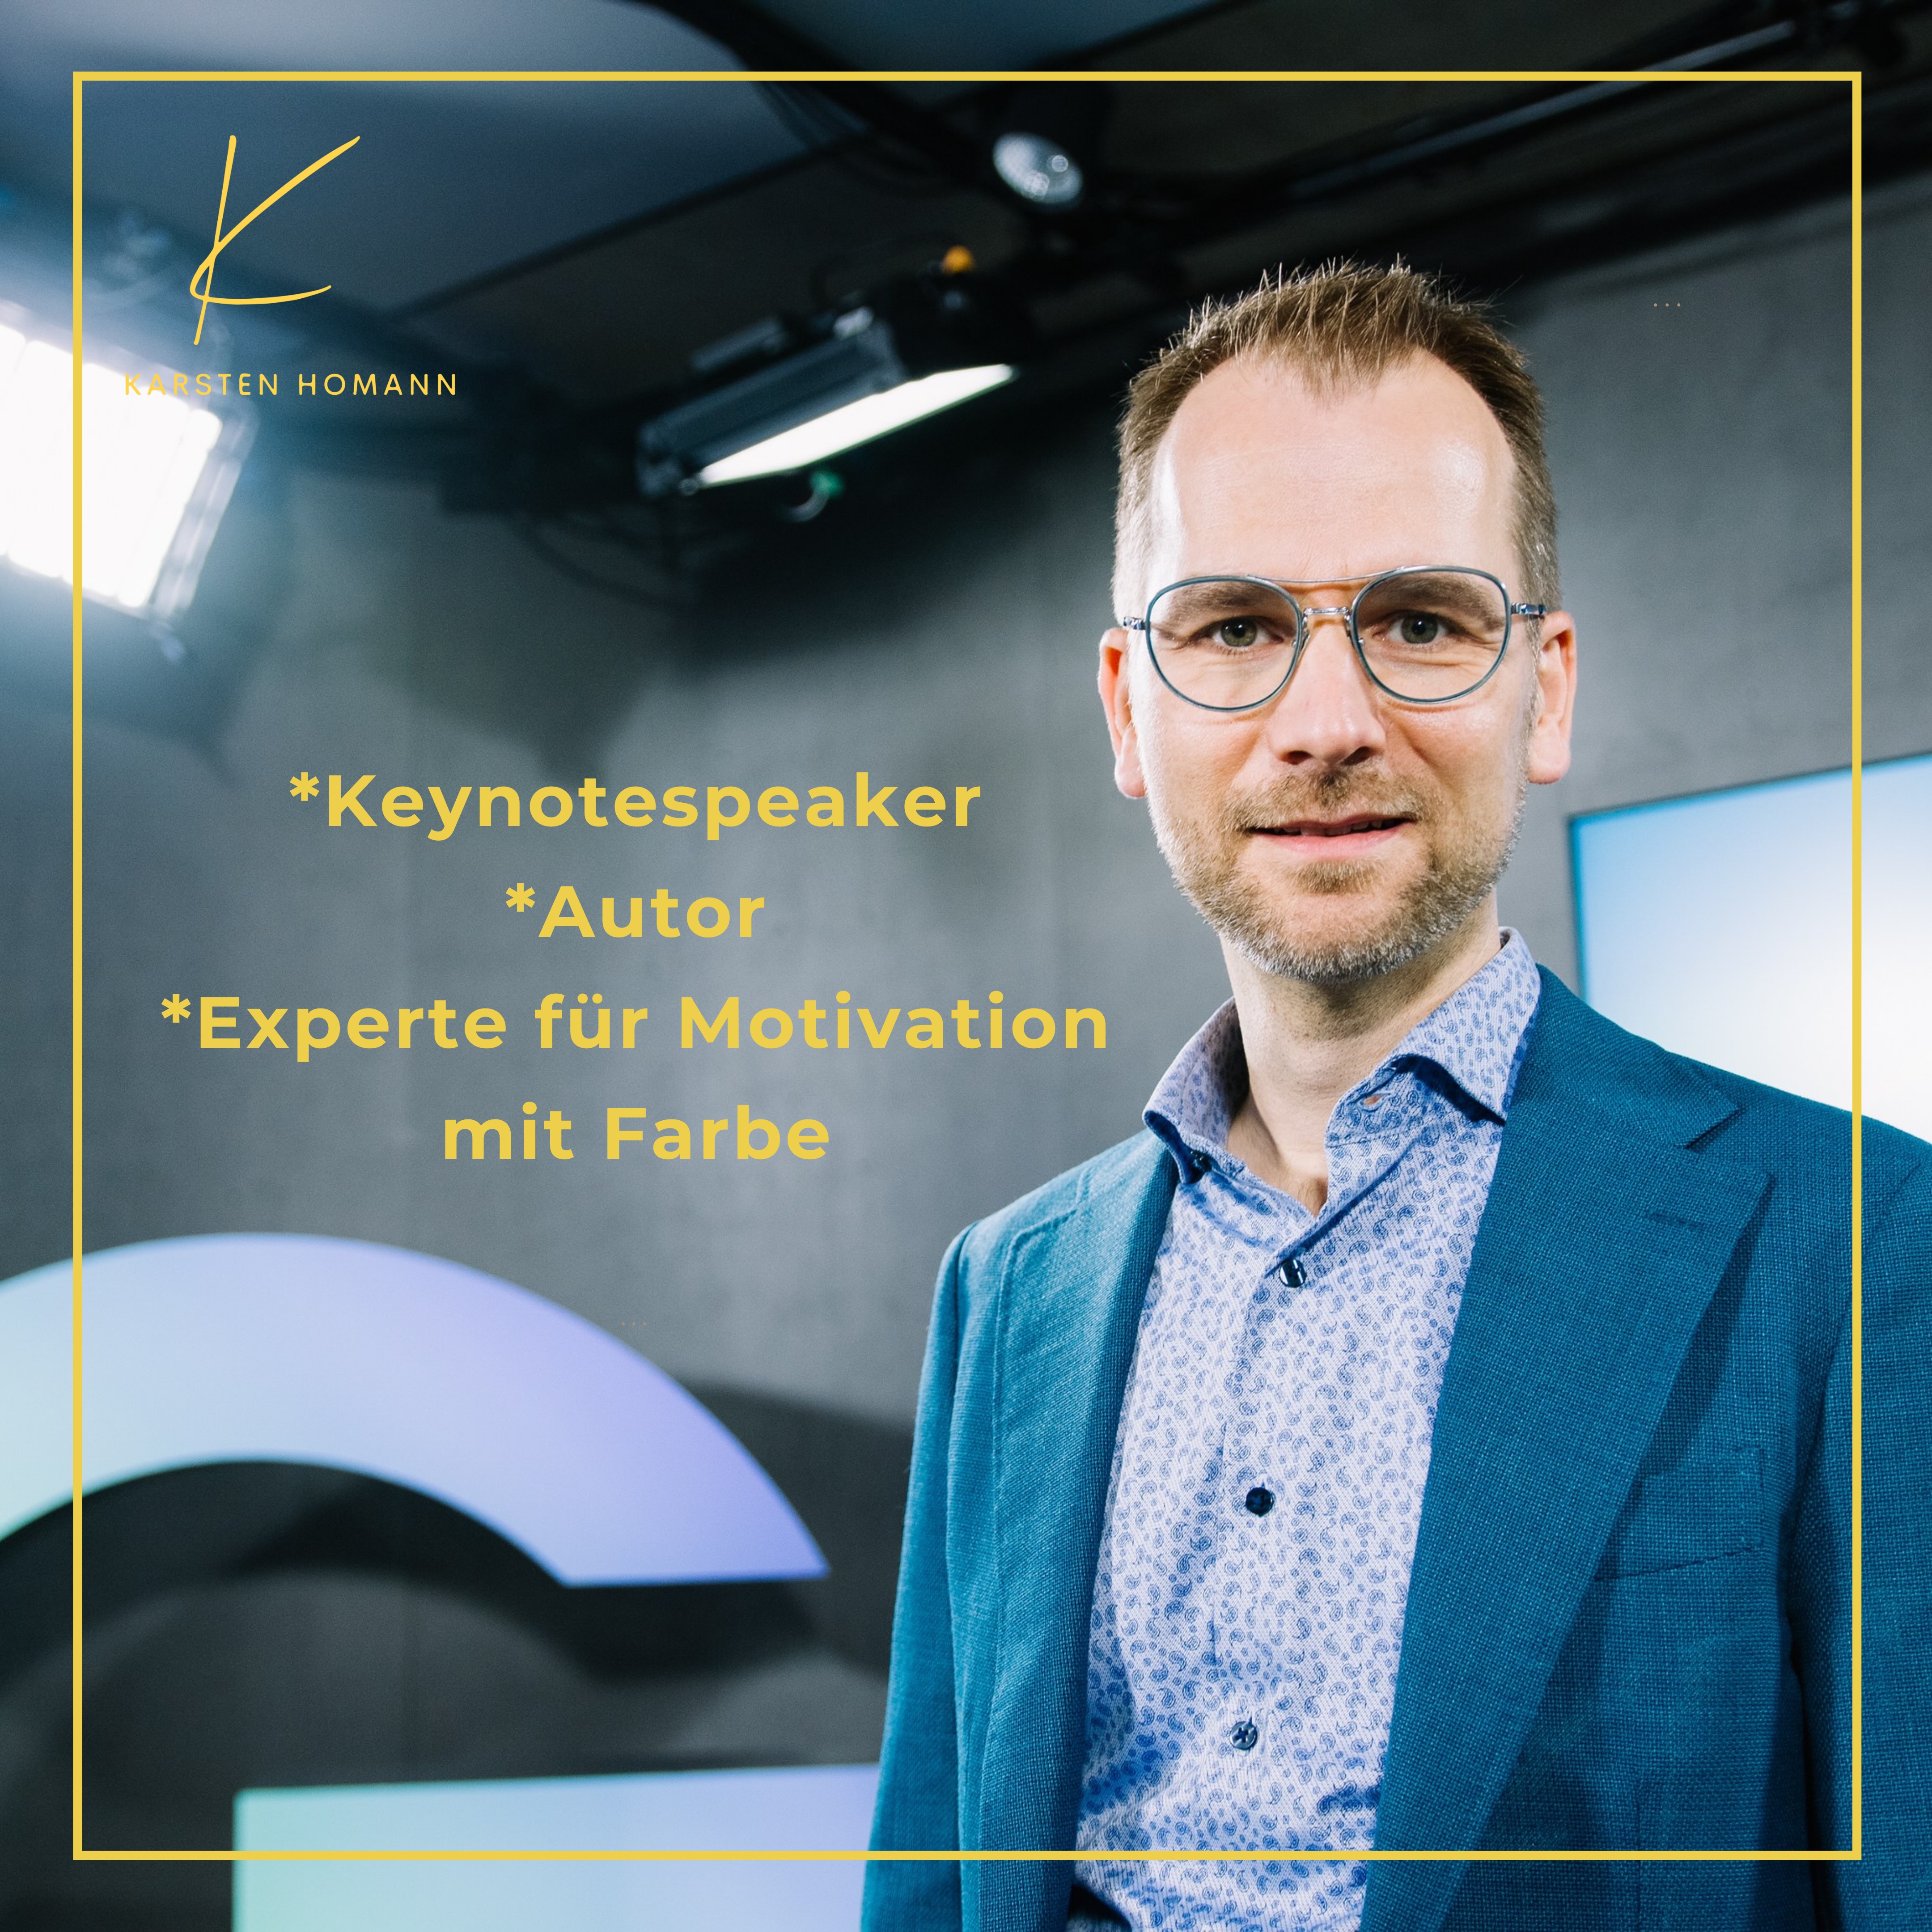 Expert Marketplace - Karsten Homann - Impressions 0